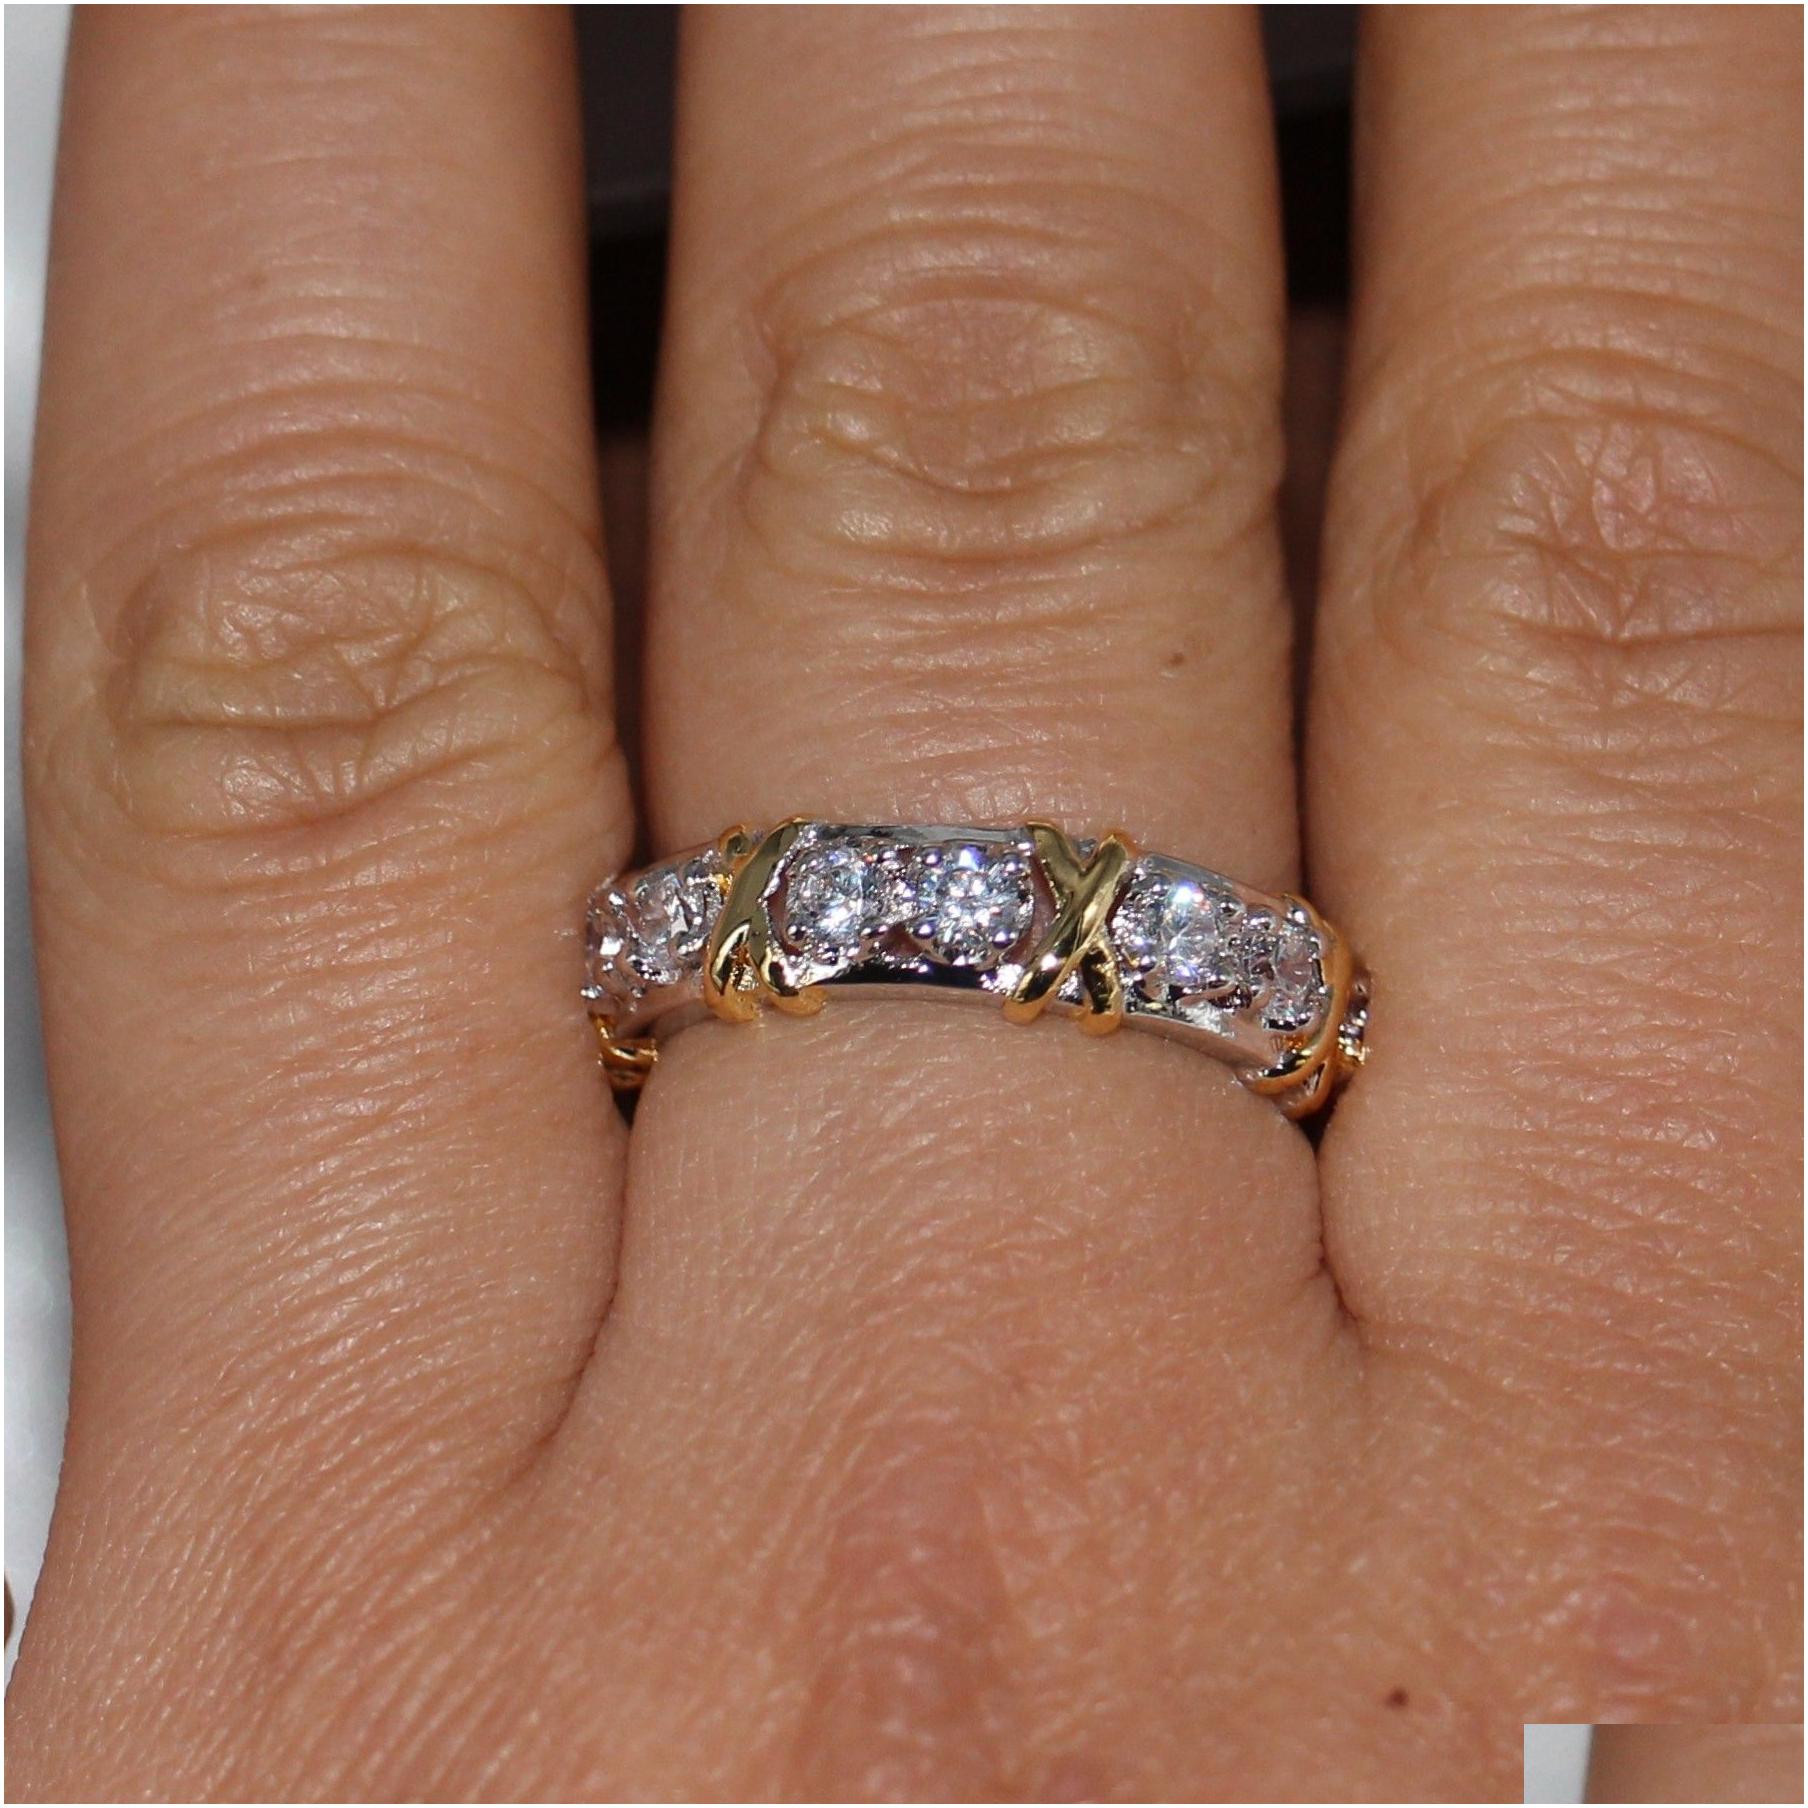 wholesale professional eternity diamonique cz simulated diamond 10kt white yellow gold filled wedding band cross ring size 5-11